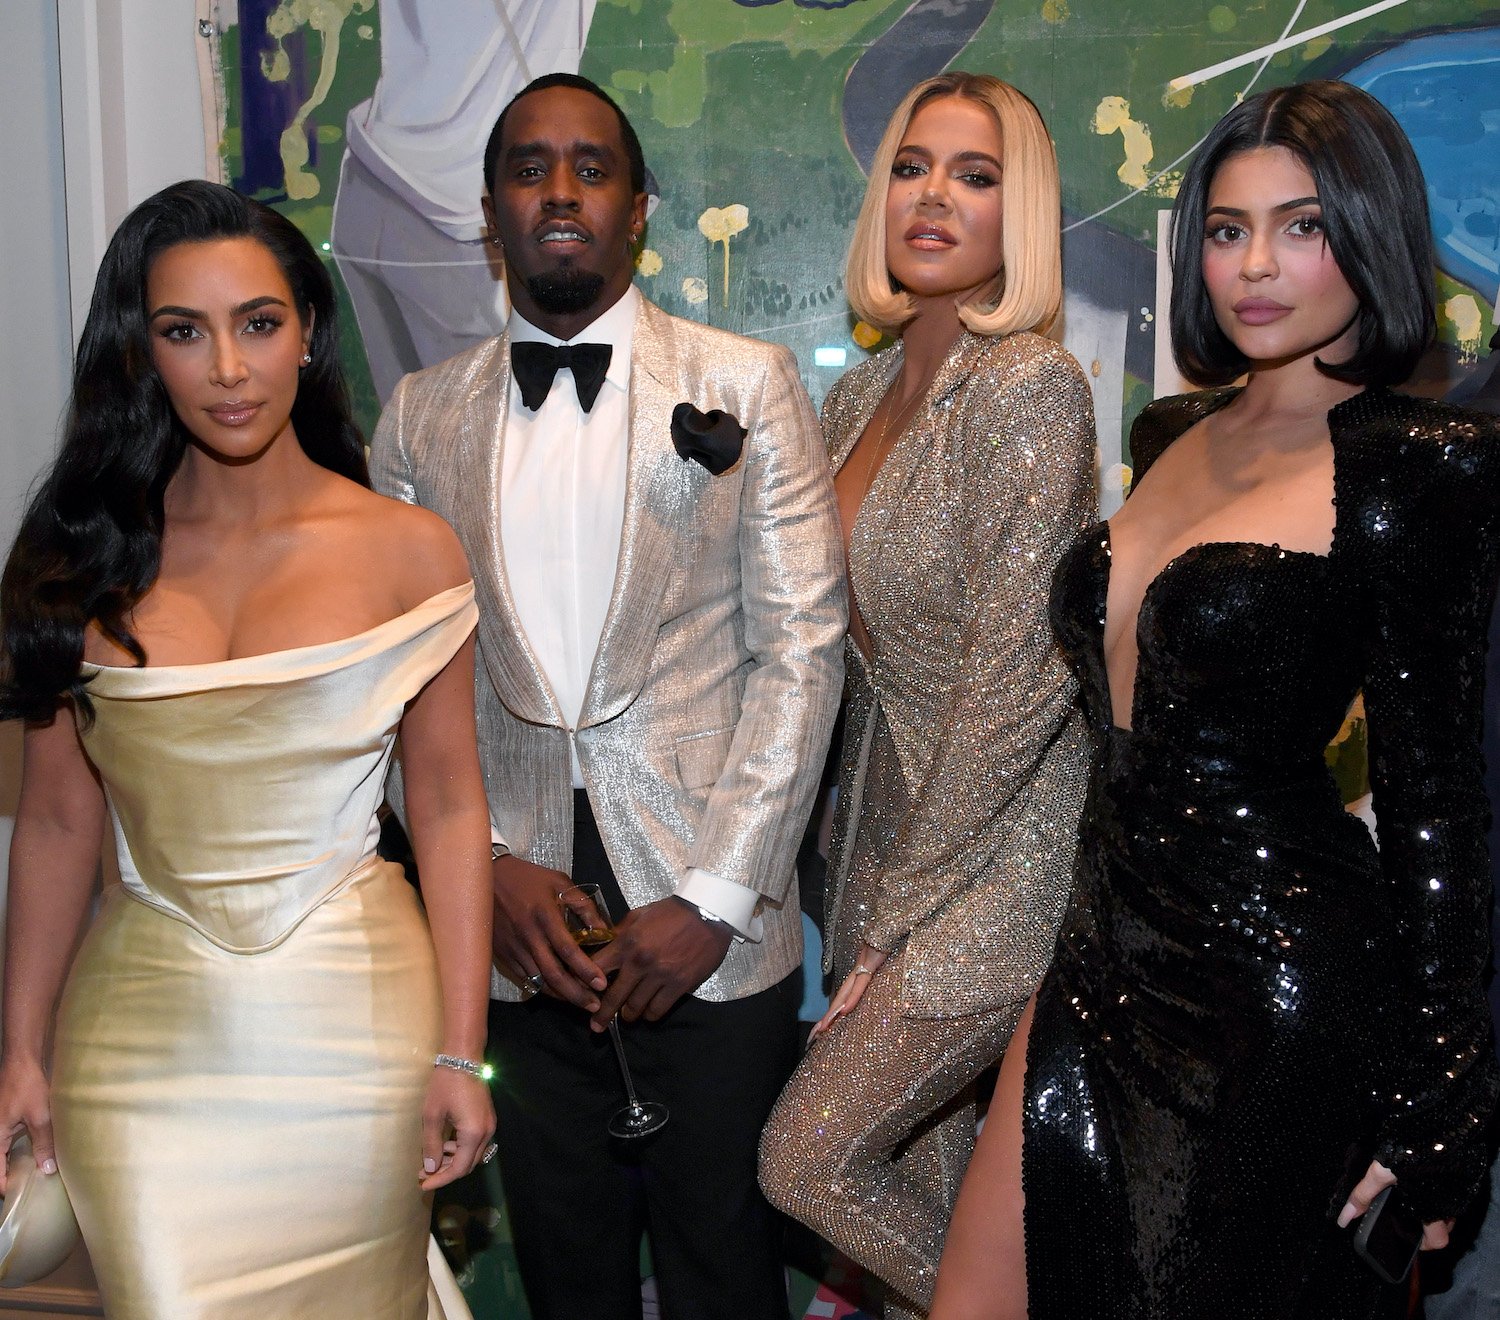 Kim Kardashian West, Sean Combs, Khloe Kardashian, and Kylie Jenner attend Sean Combs 50th Birthday Bash